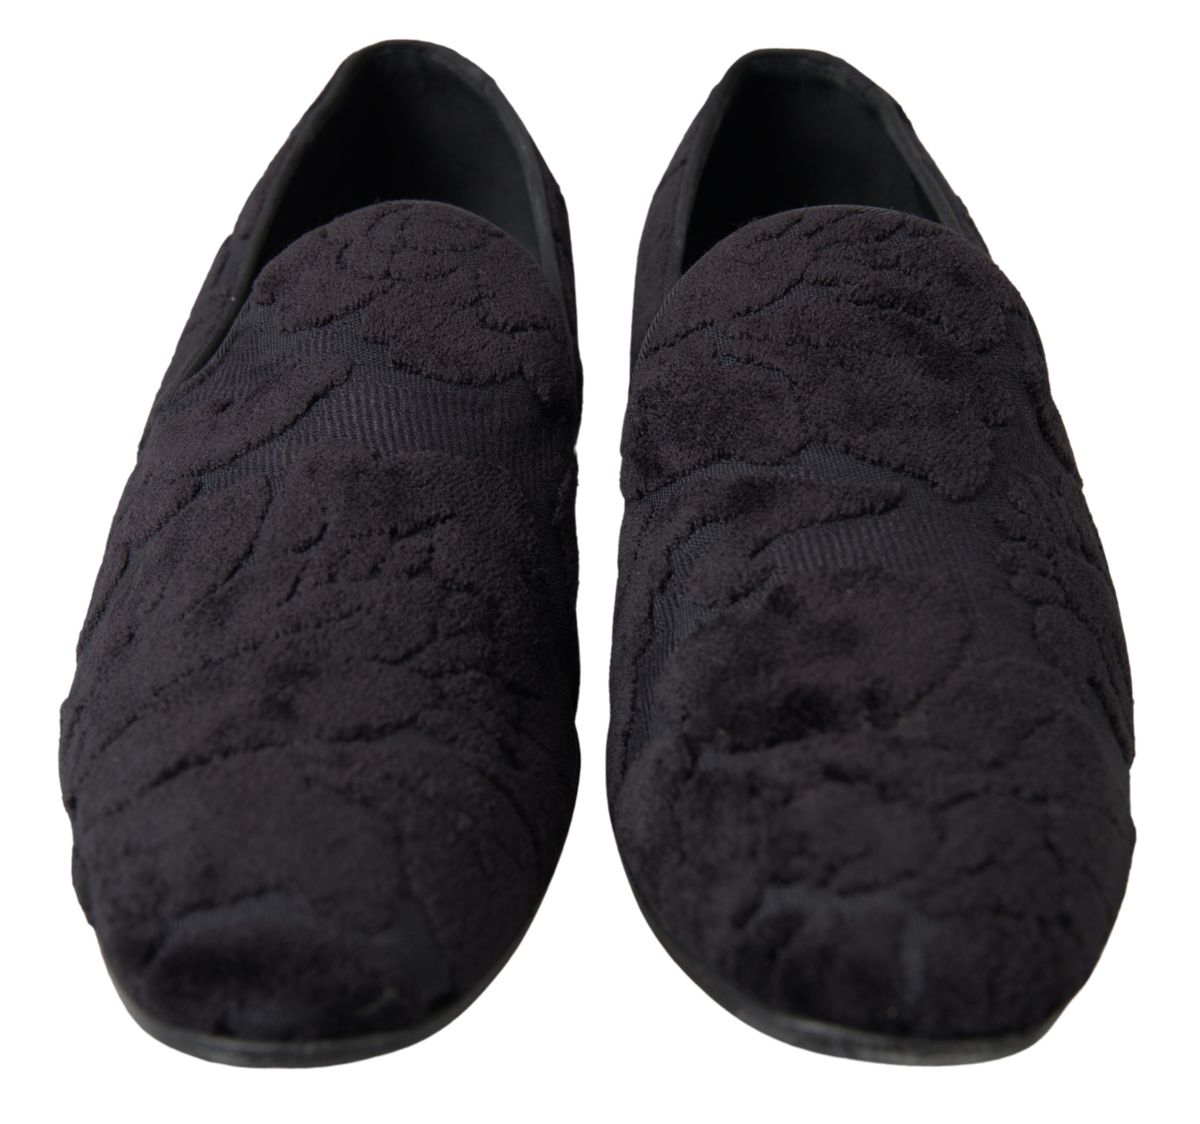 Fashionsarah.com Fashionsarah.com Dolce & Gabbana Black Brocade Loafers Men Formal Shoes